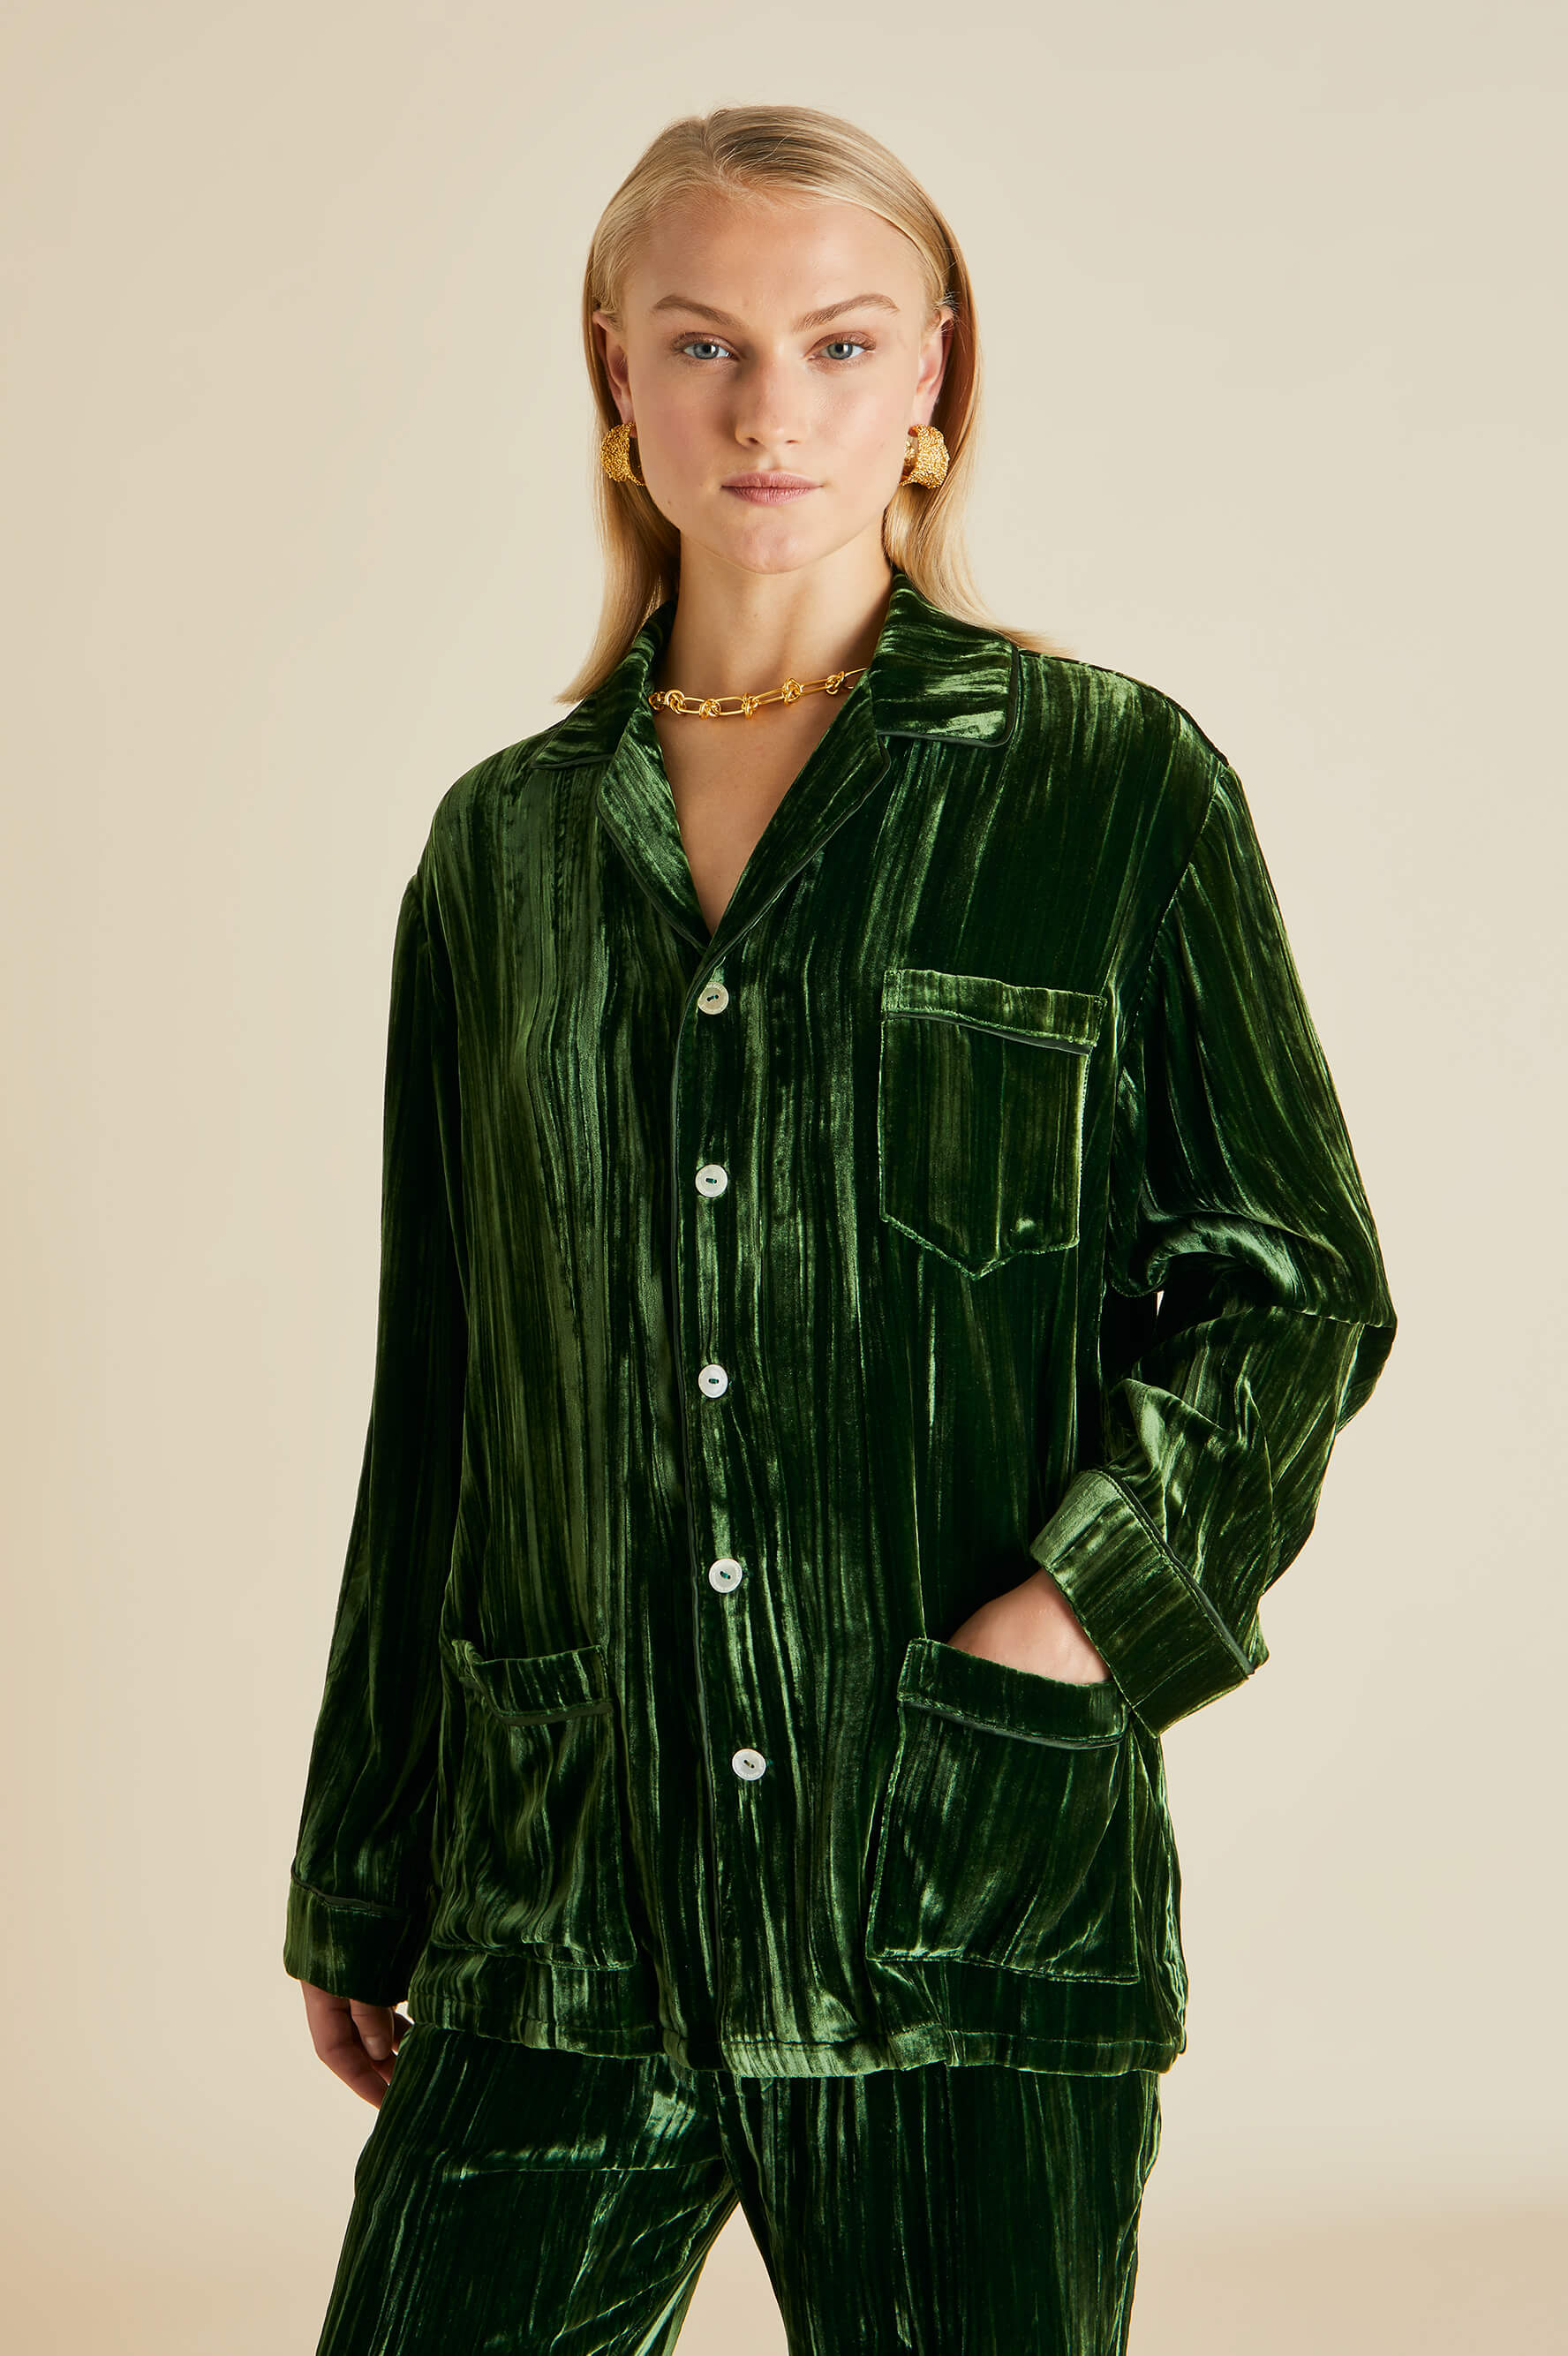 Fable & Eve Pimlico Solid Pyjama Set, Emerald Green at John Lewis & Partners